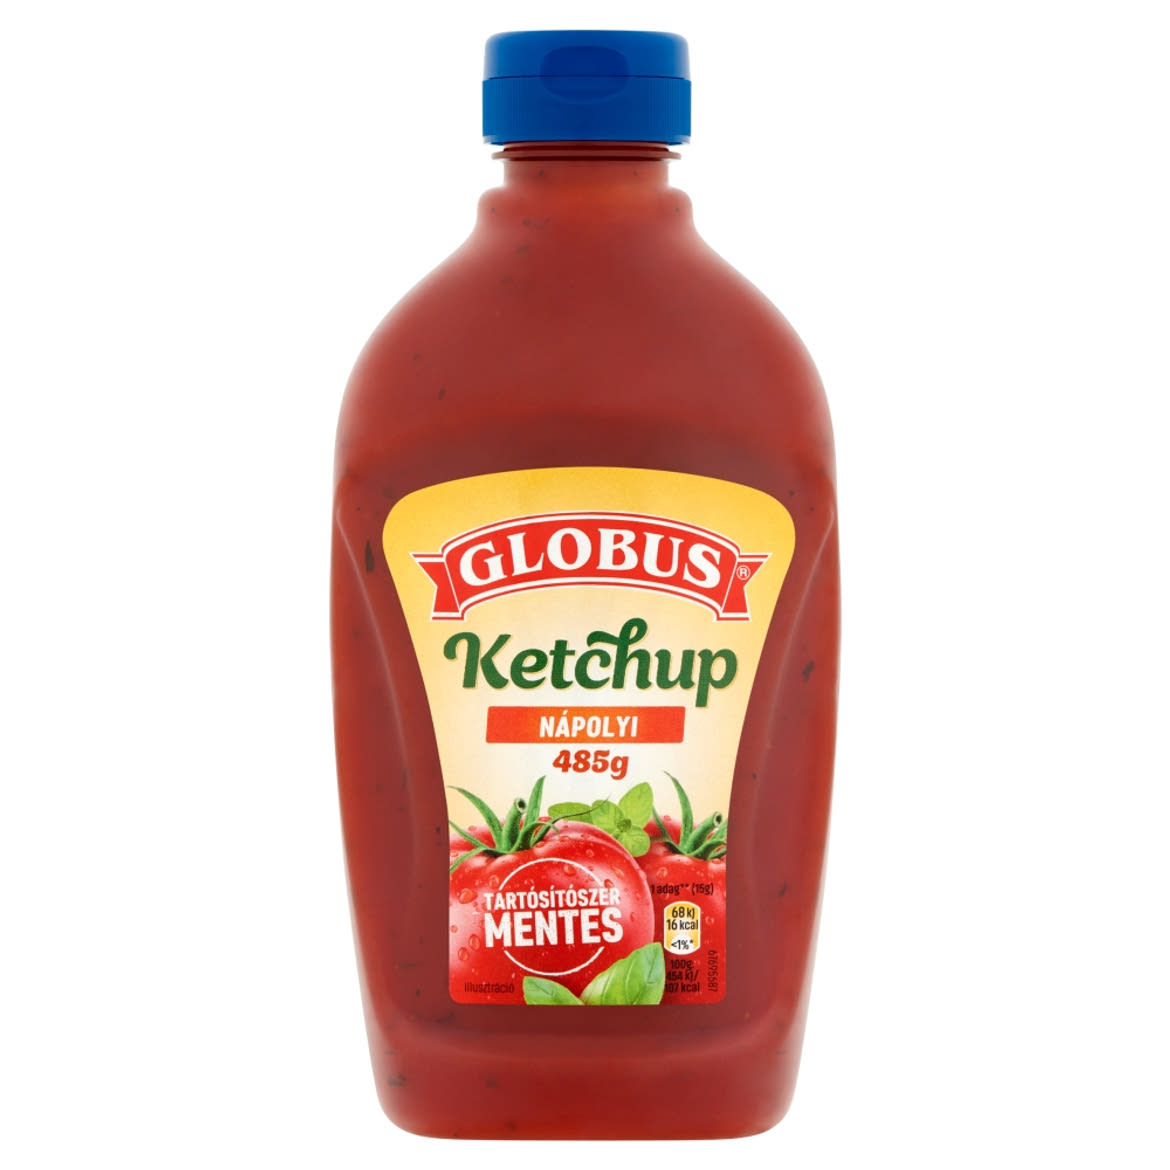 Globus nápolyi ketchup